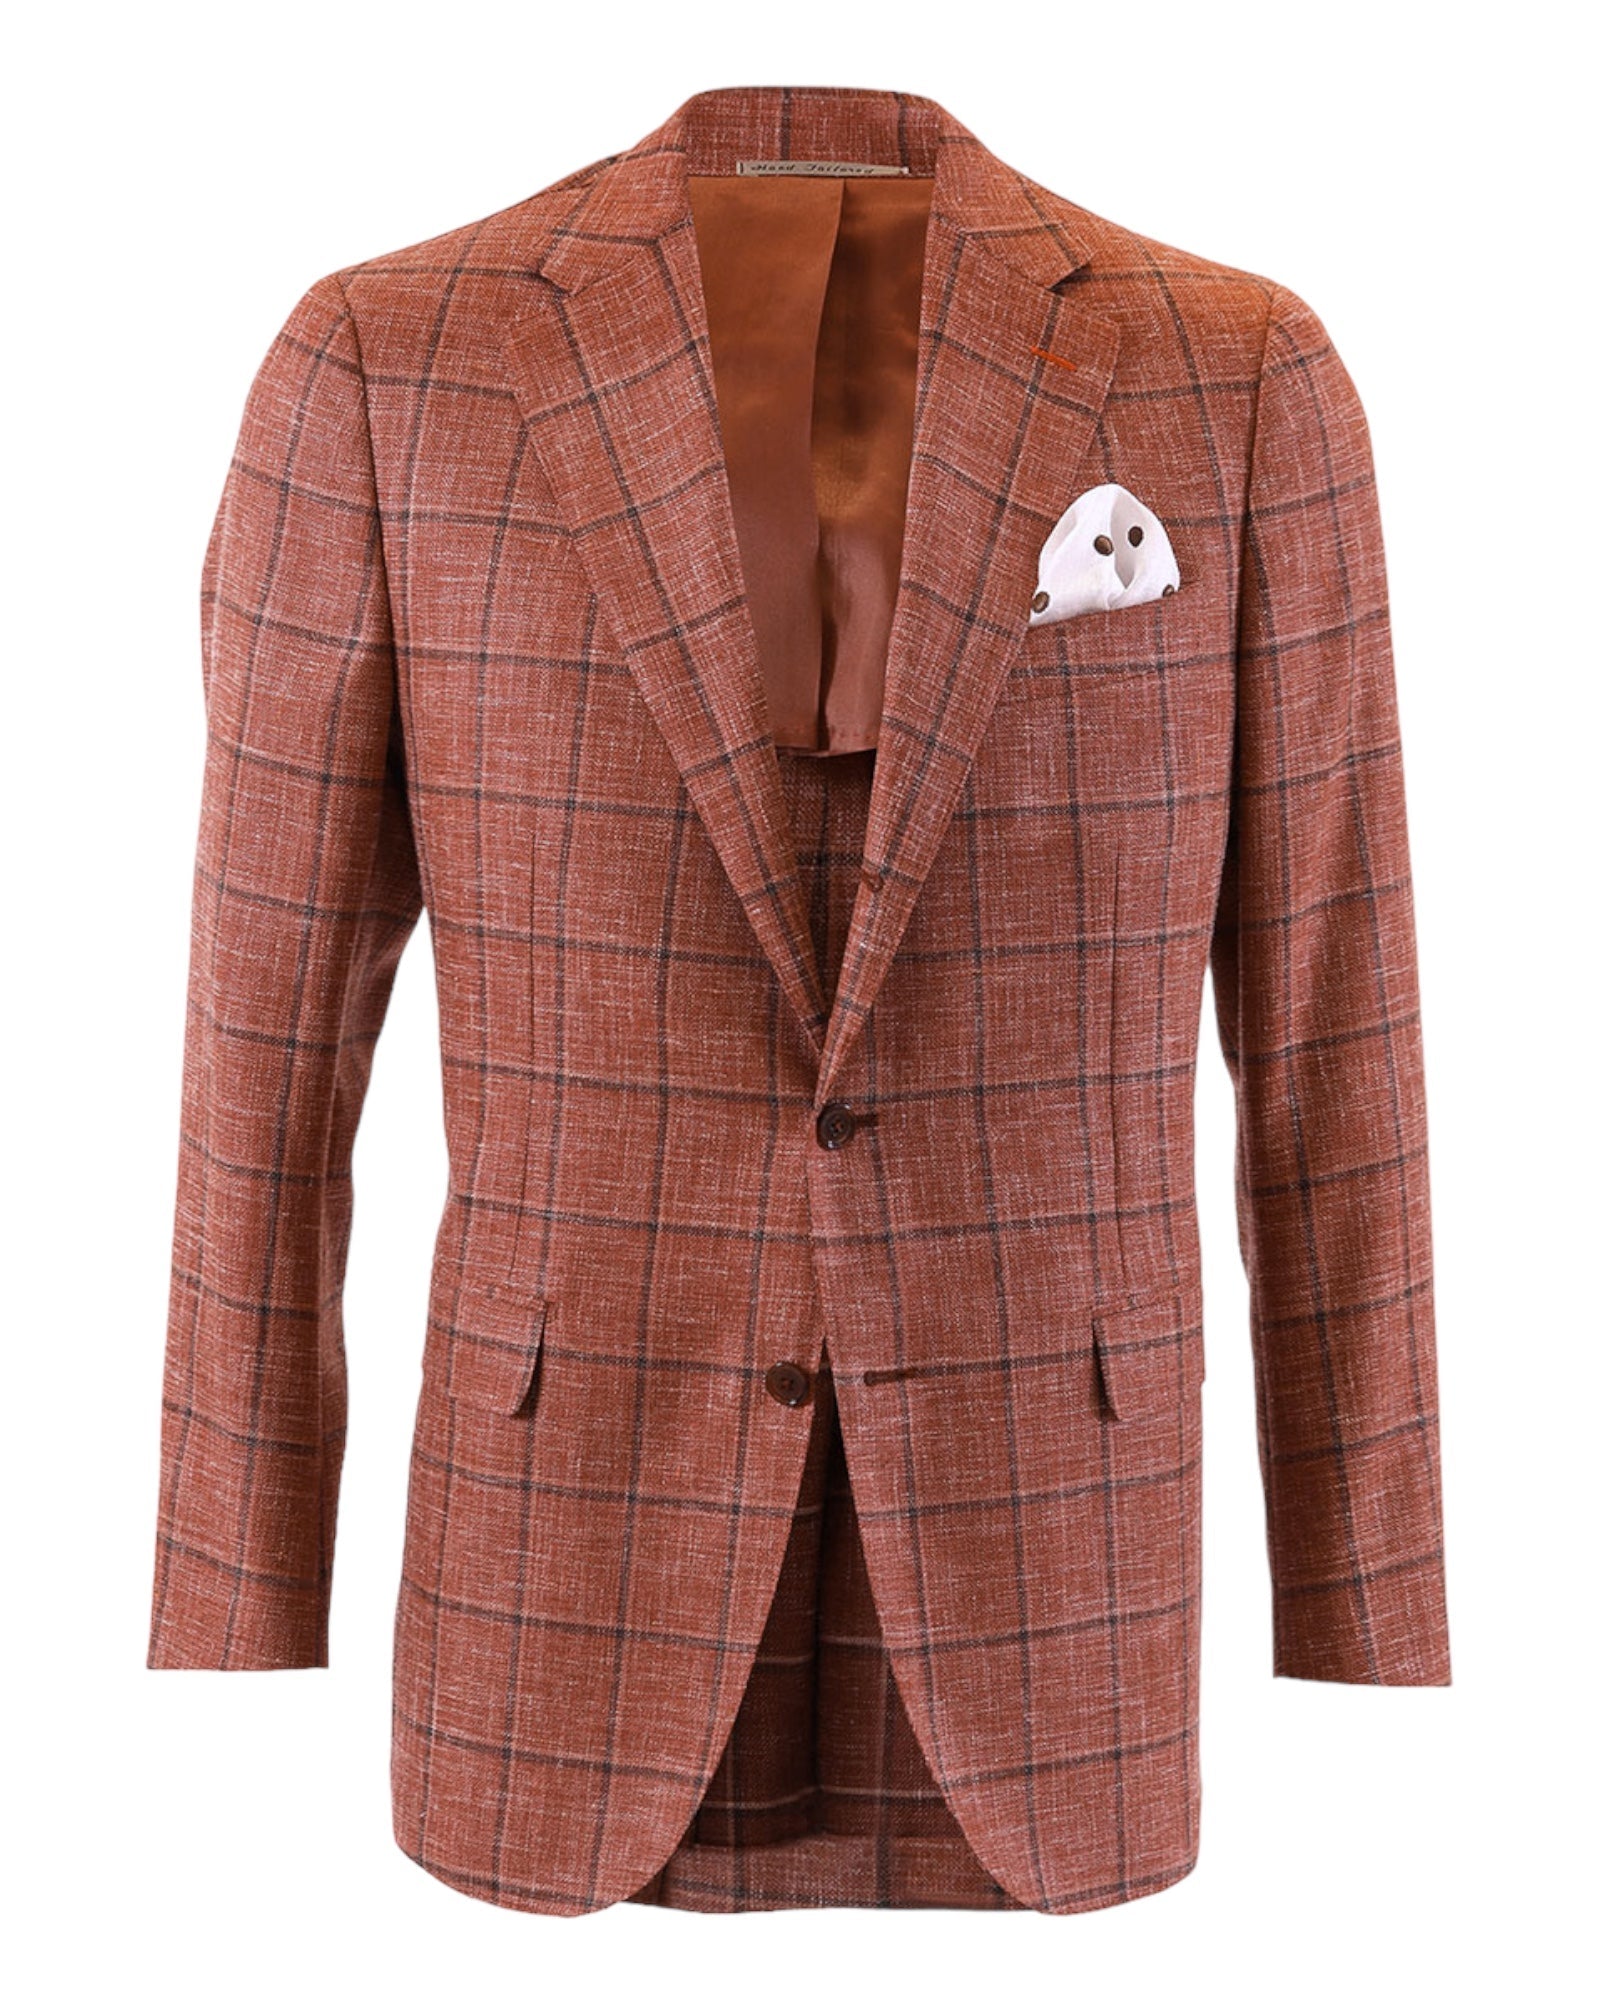 Sartorial Sport Jacket - Rust with Brown Windowpane JACKETS50R